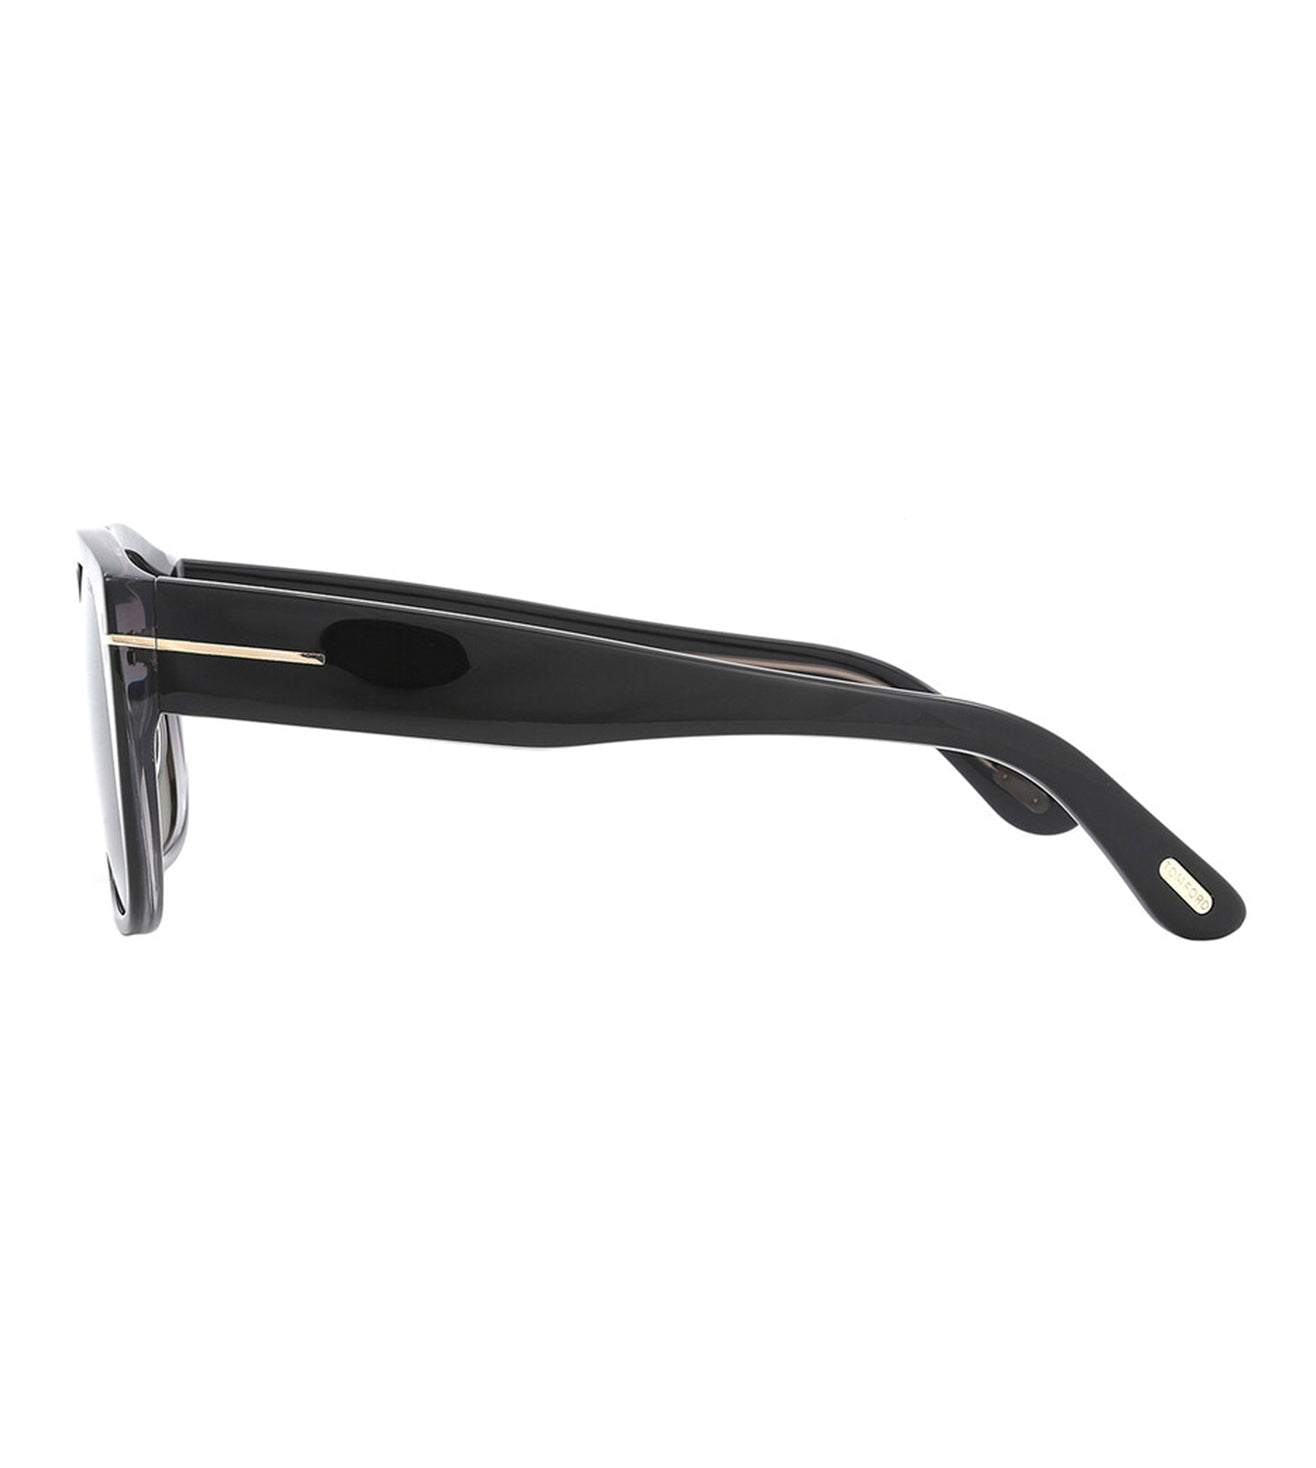 Tom Ford Oliver Men's Grey Smoke Square Sunglasses